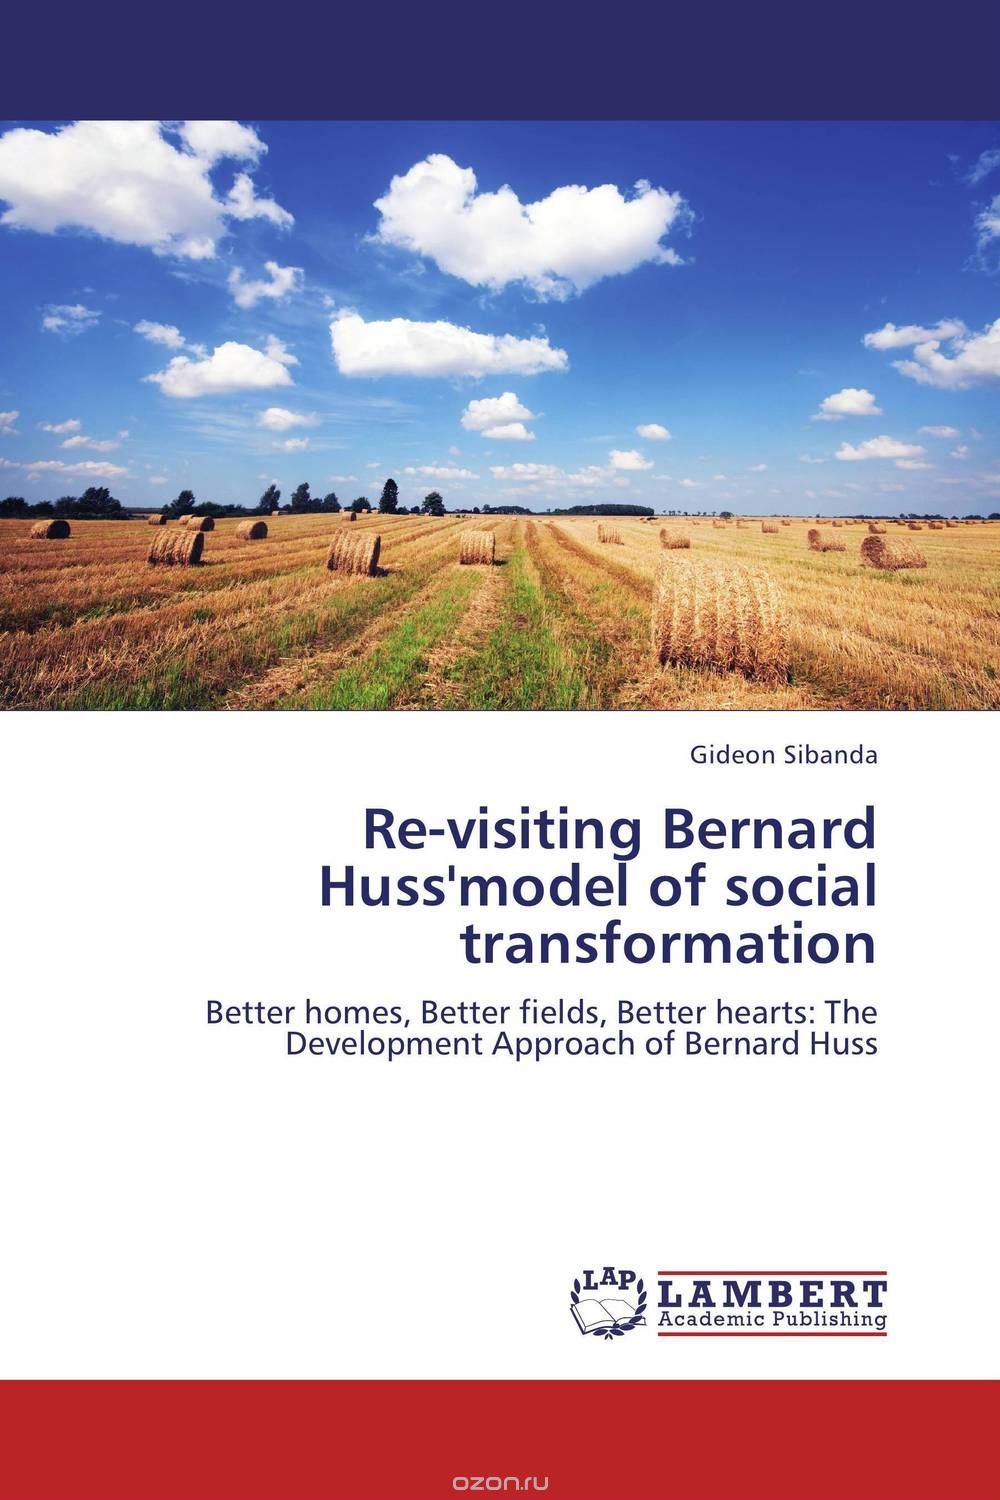 Скачать книгу "Re-visiting Bernard Huss'model of social transformation"